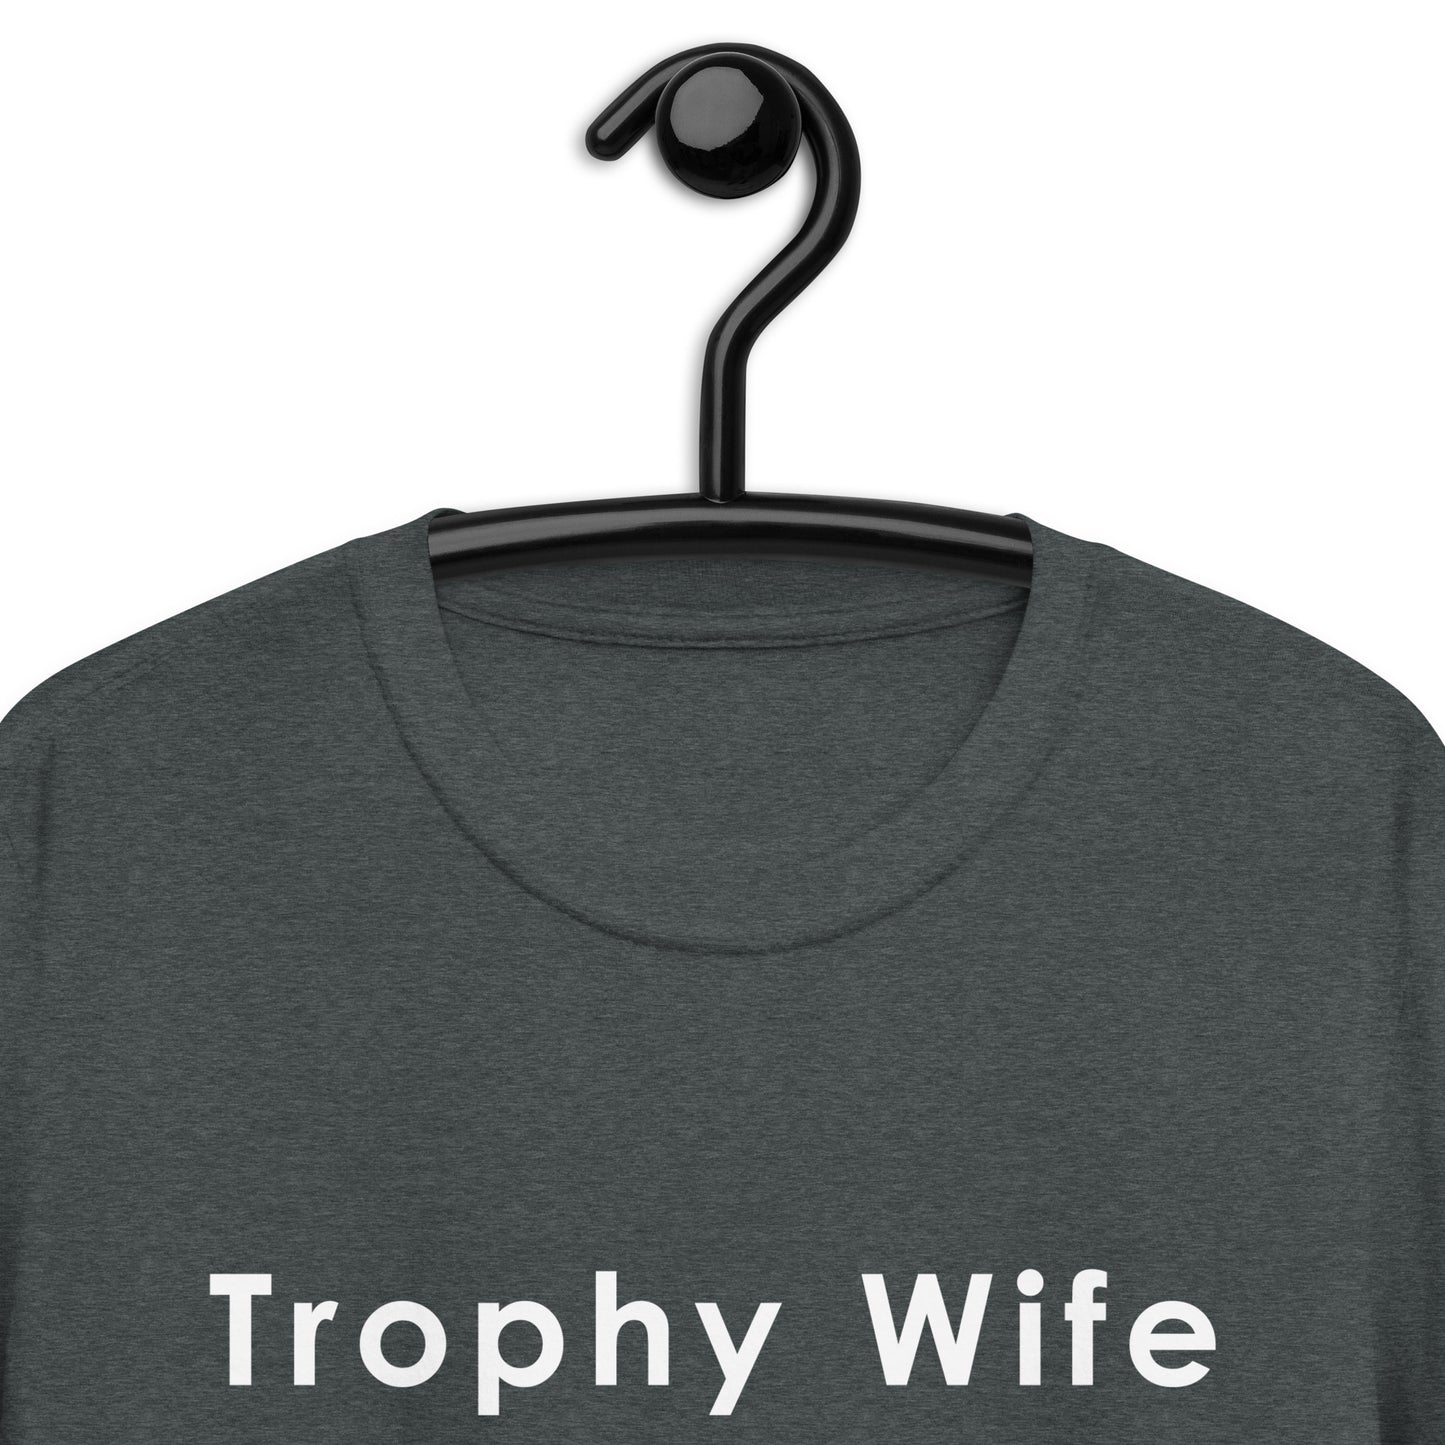 Trophy wife Short-Sleeve Unisex T-Shirt